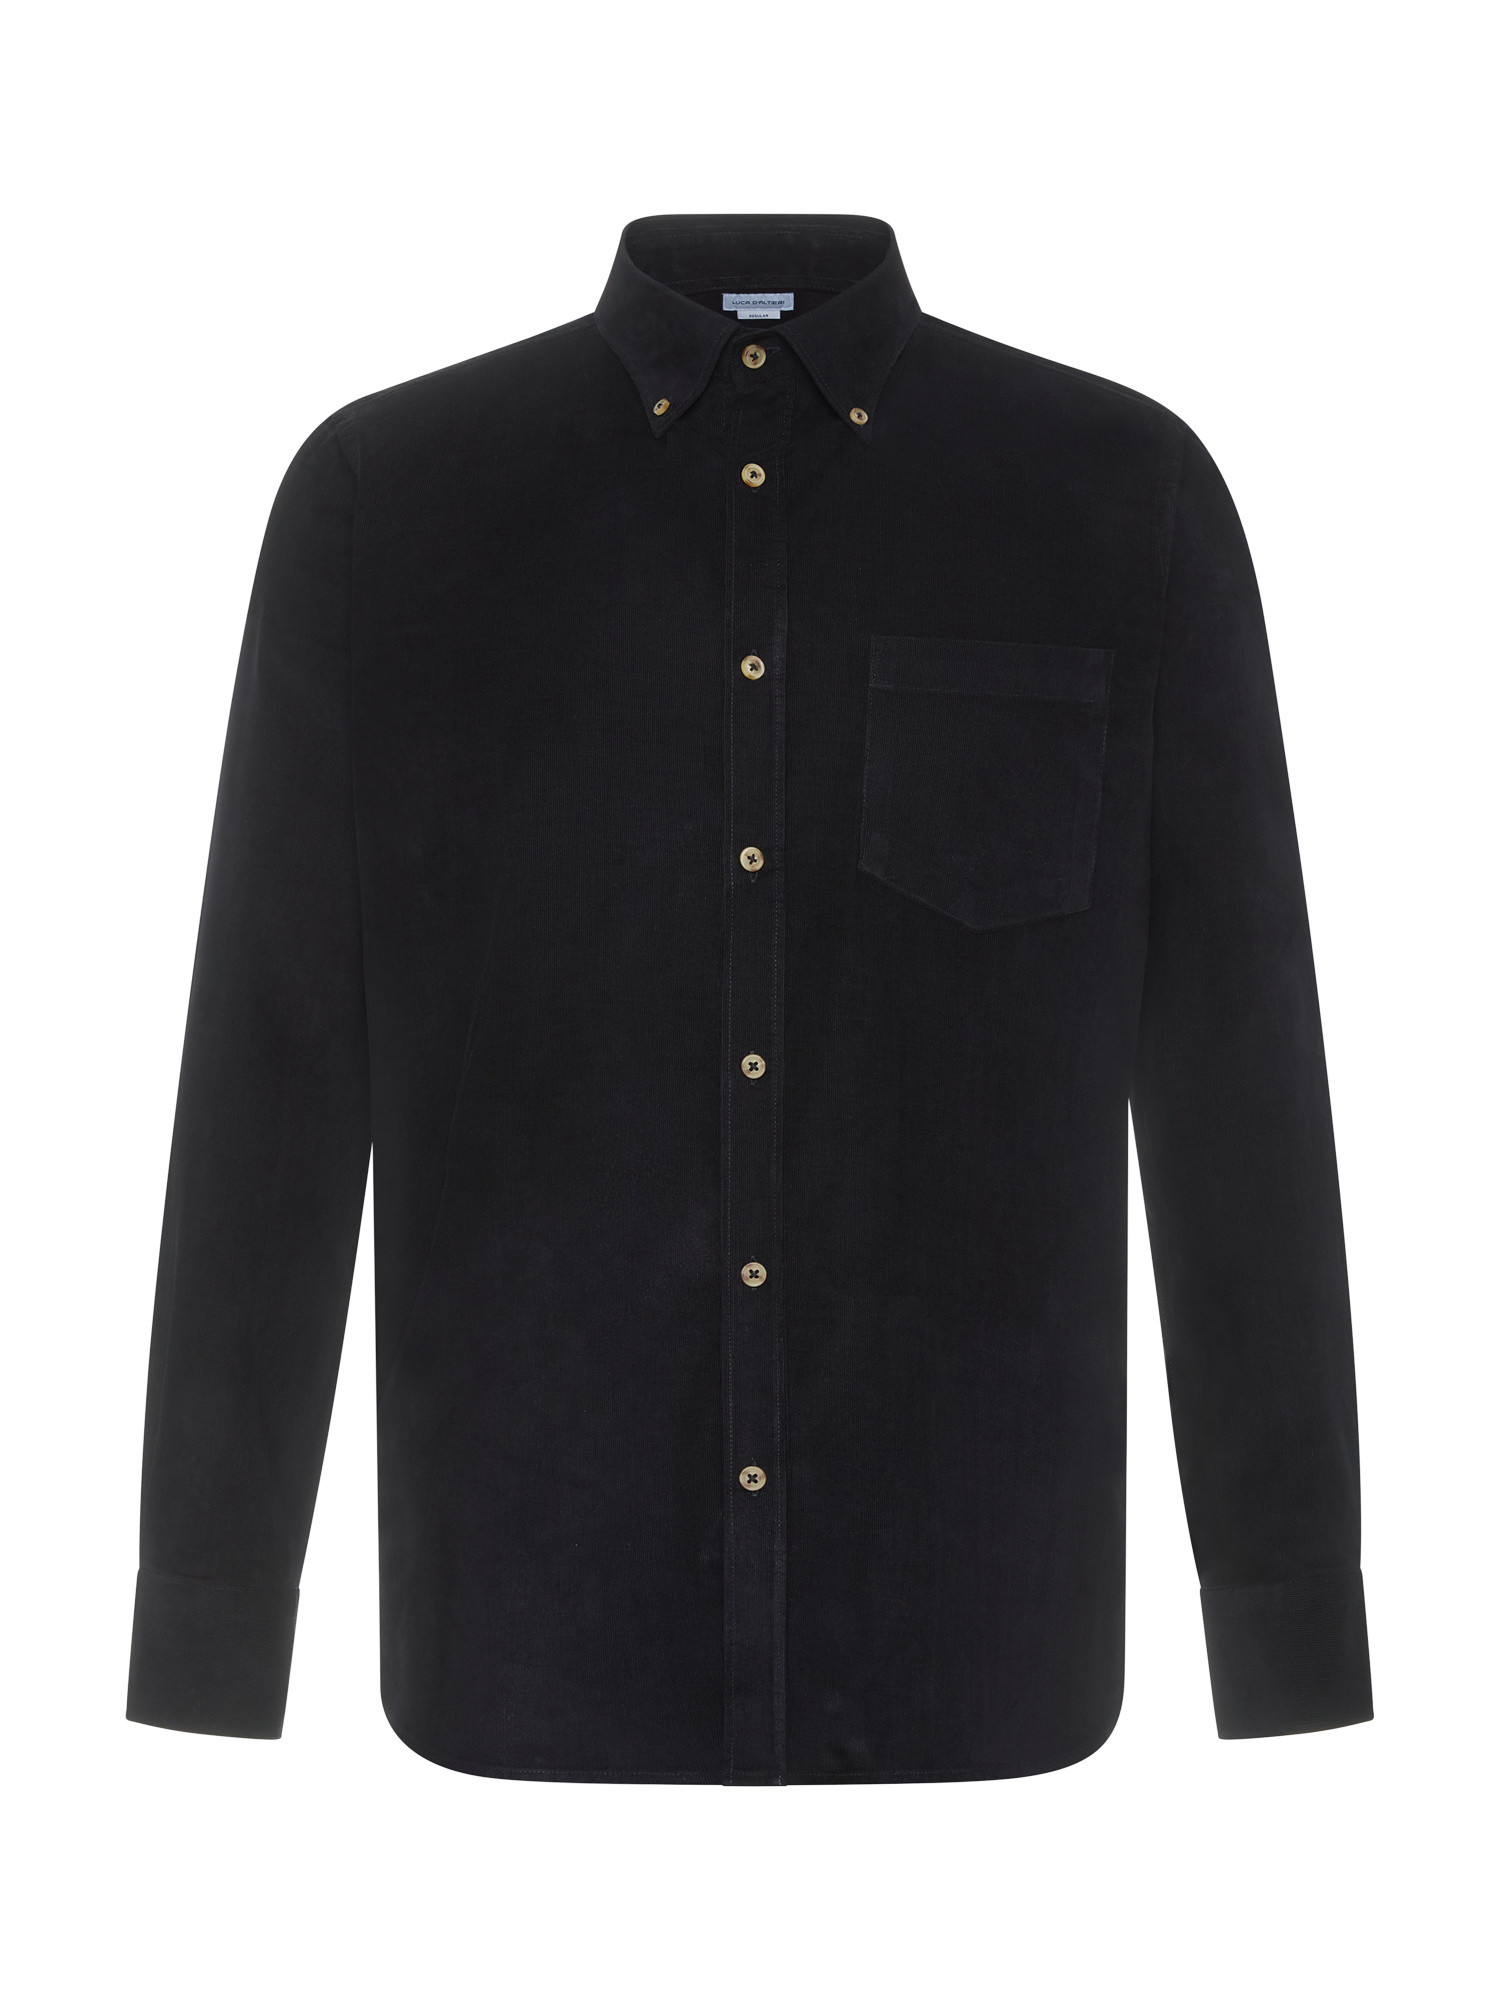 Luca D'Altieri - Regular fit casual shirt in fine cotton velvet, Black, large image number 0